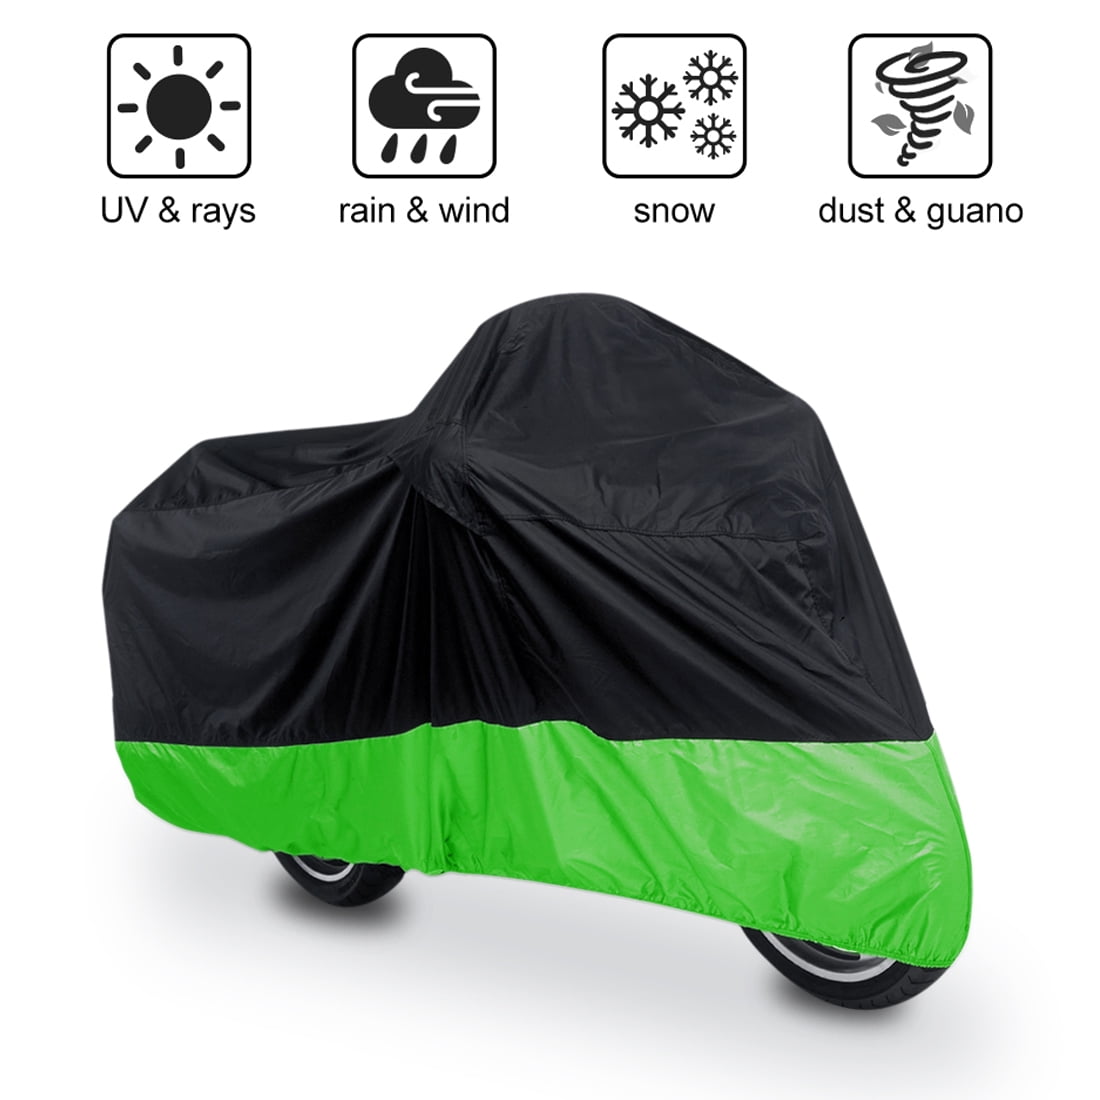 Black & Green Motorcycle Cover For KAWASAKI Ninja 650/500 UV Dust Protector M 